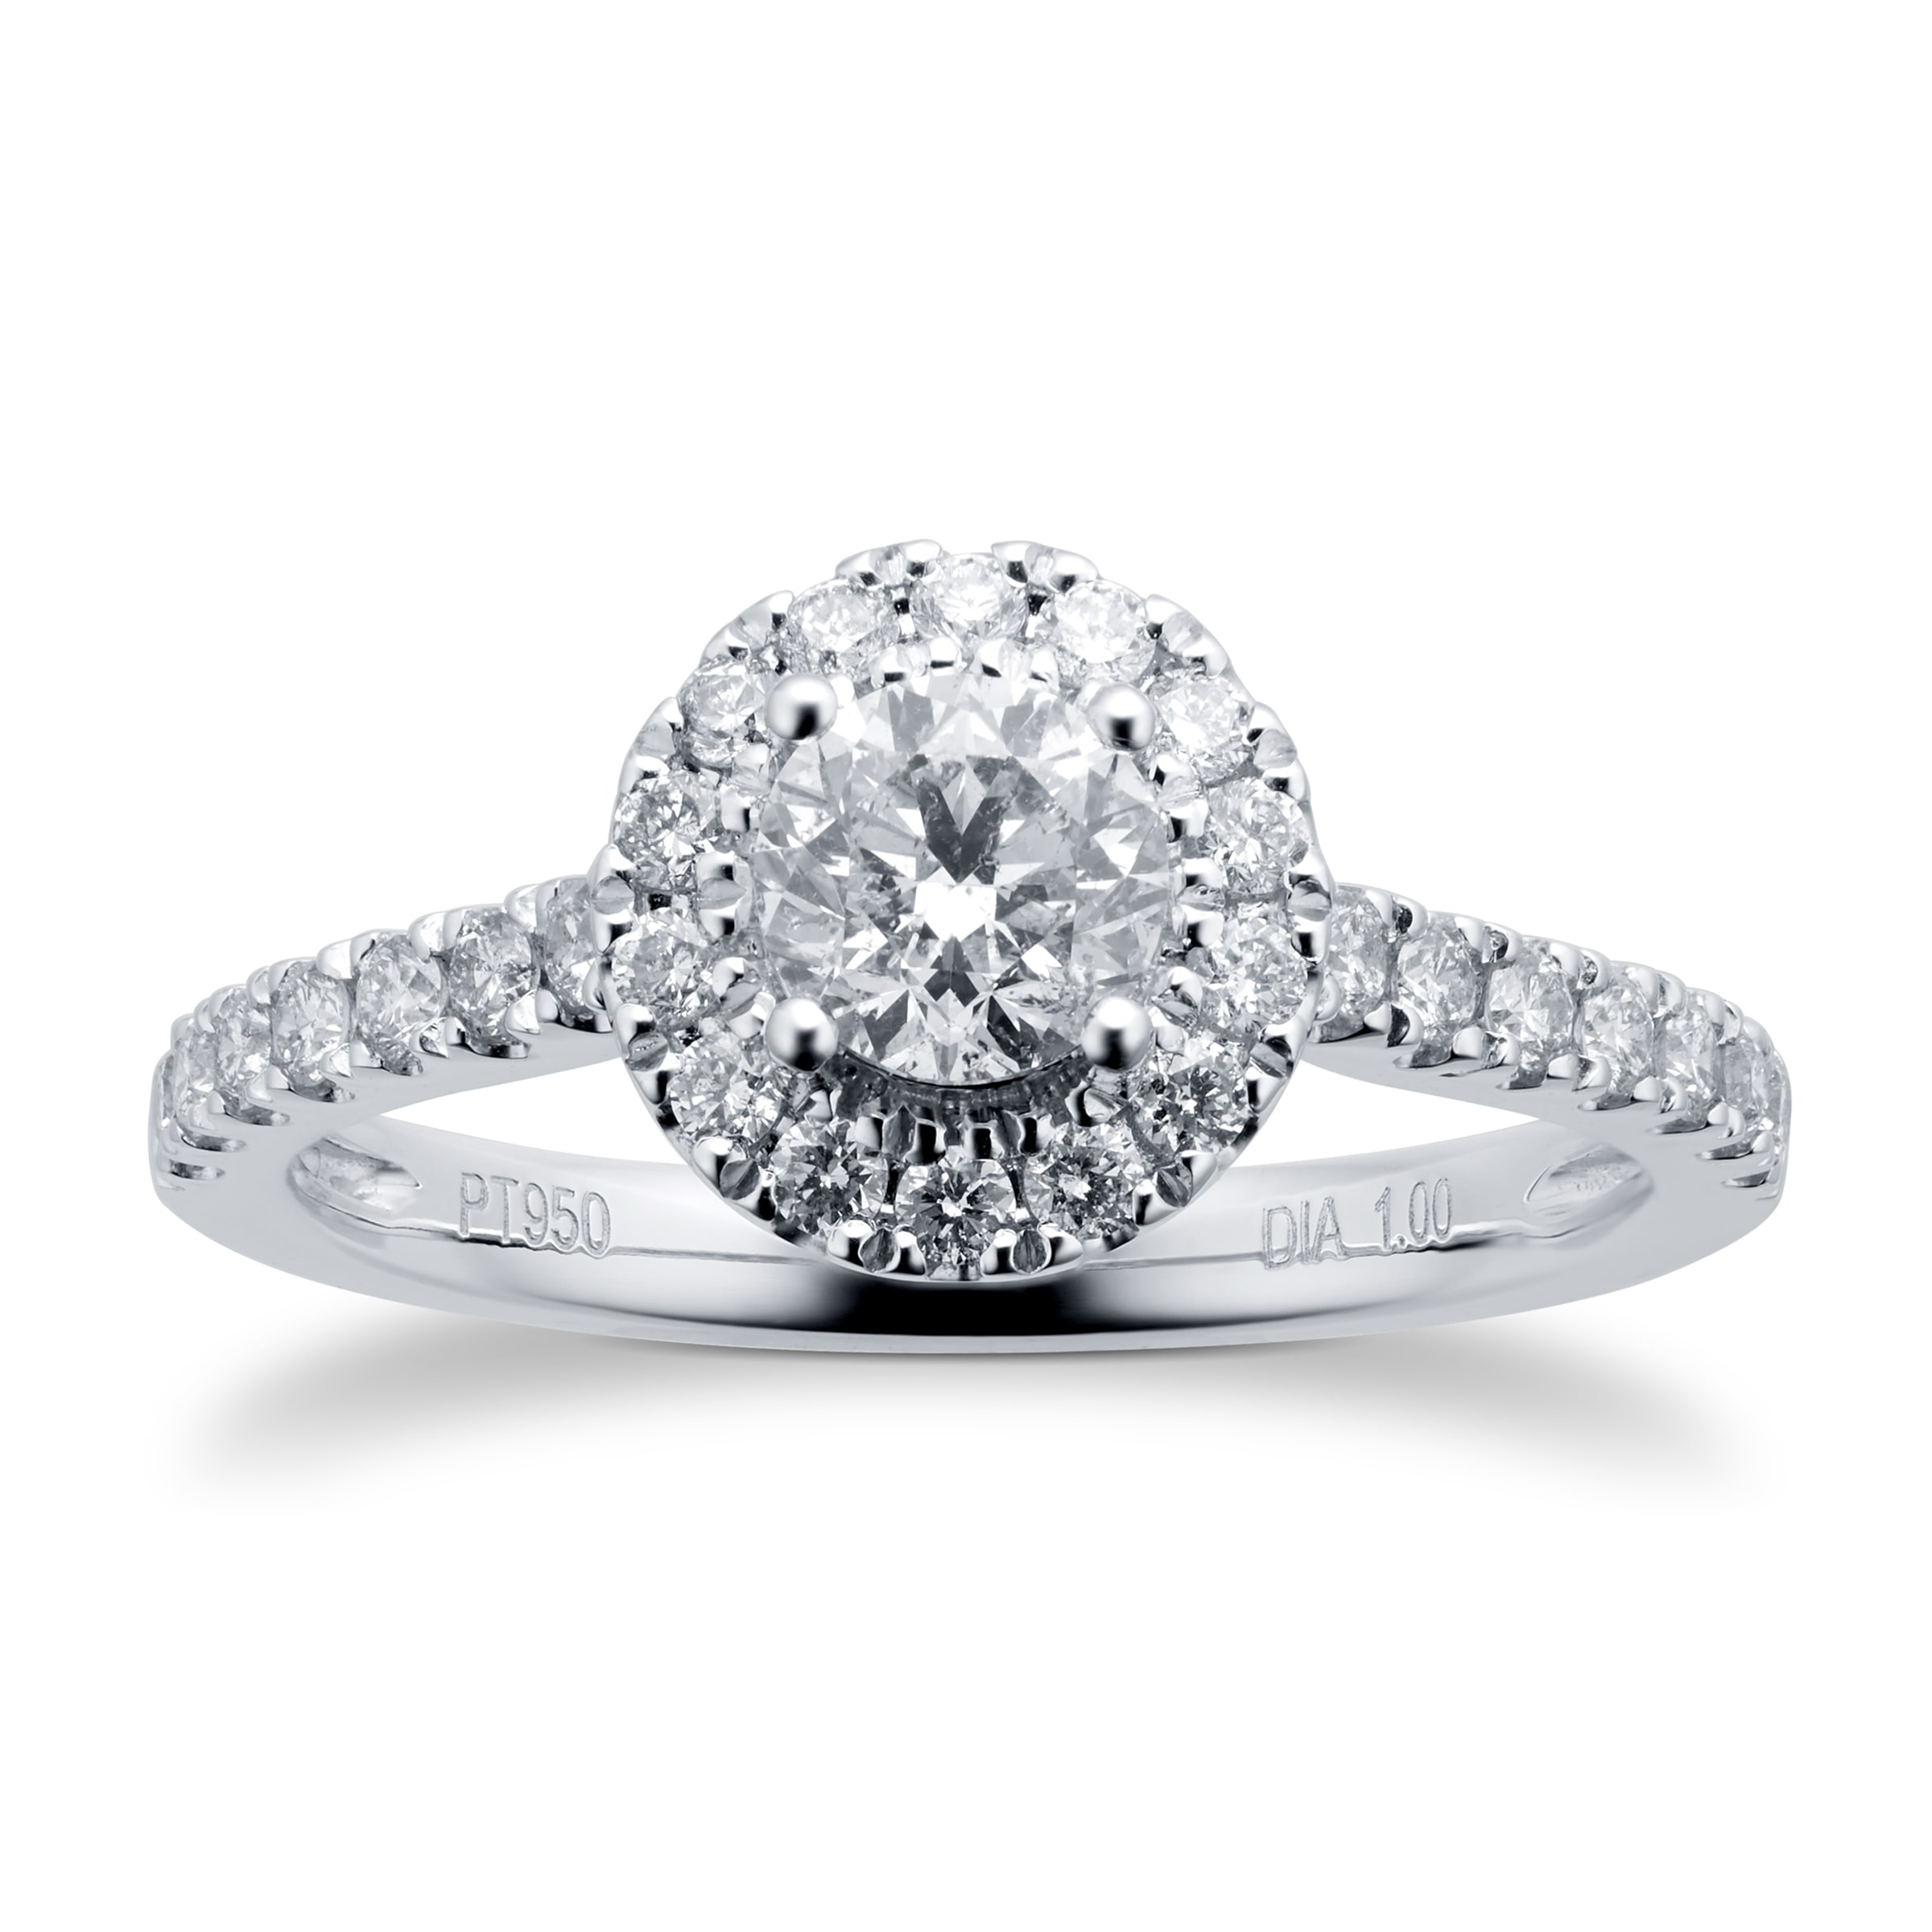 Platinum 1.00cttw Diamond Halo Ring - Ring Size O